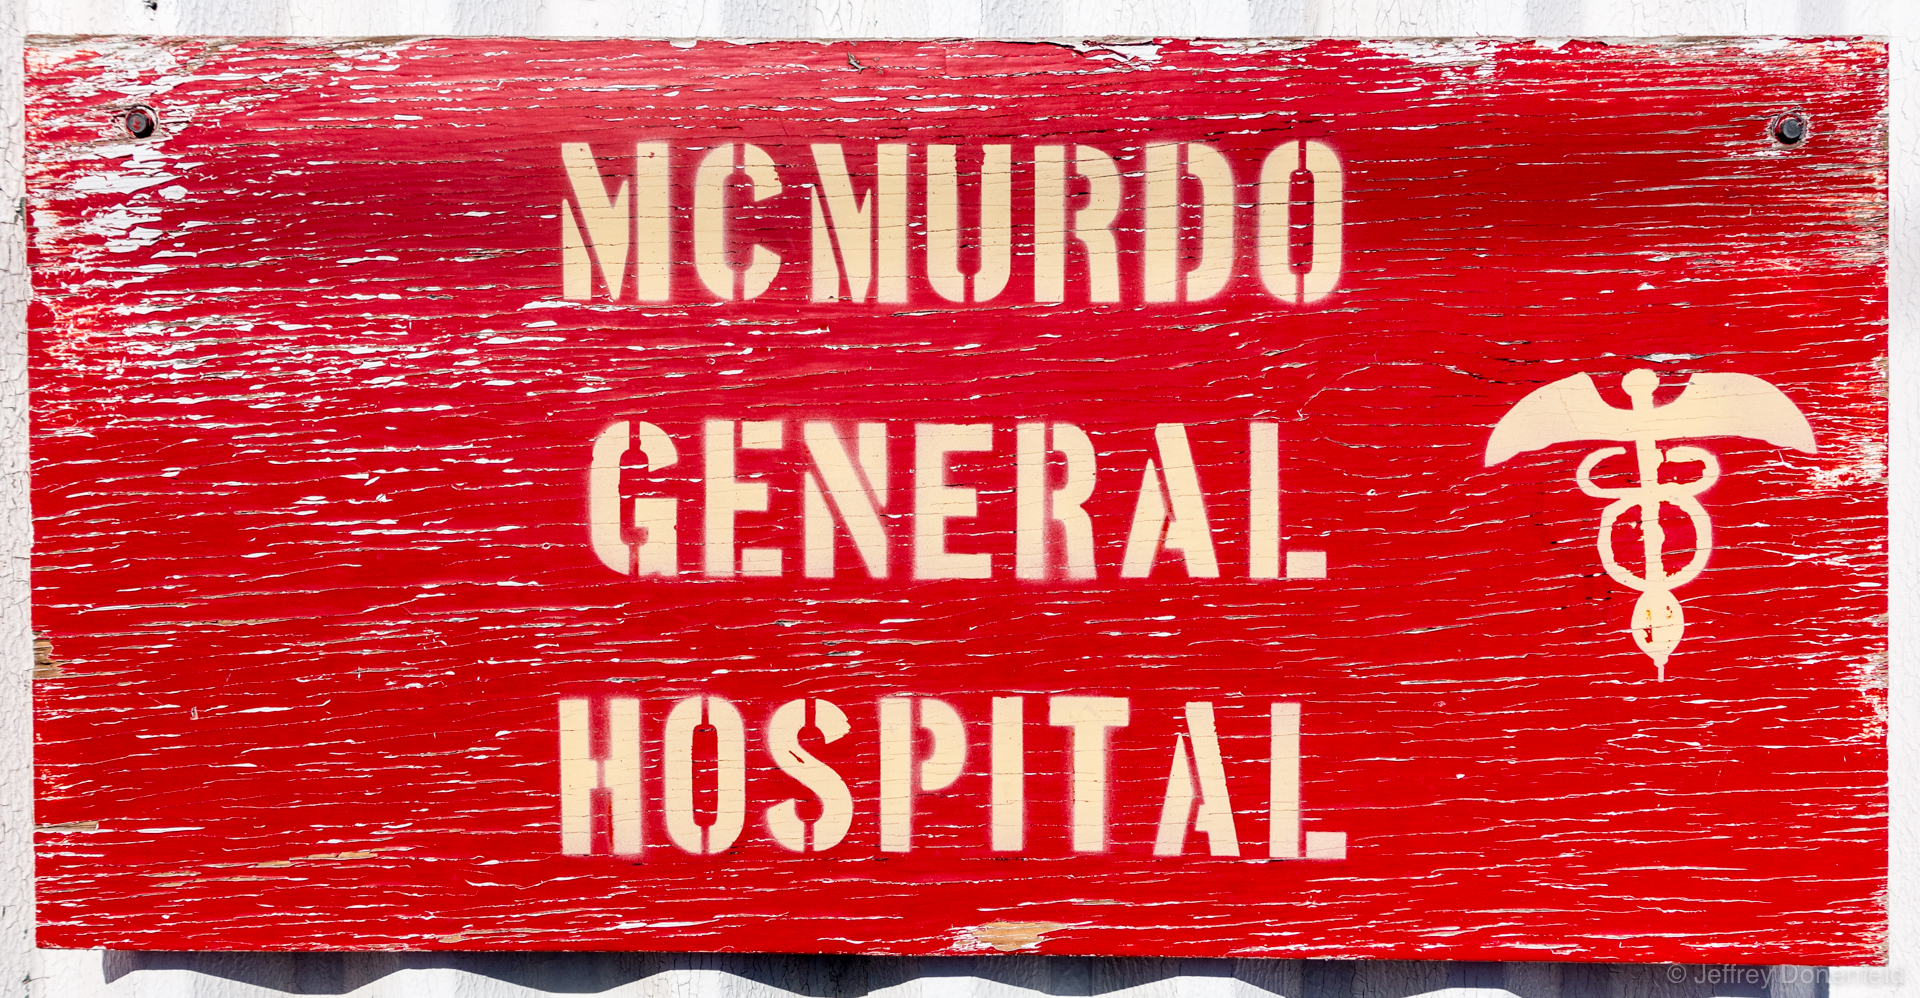 McMurdo Station’s Hospital